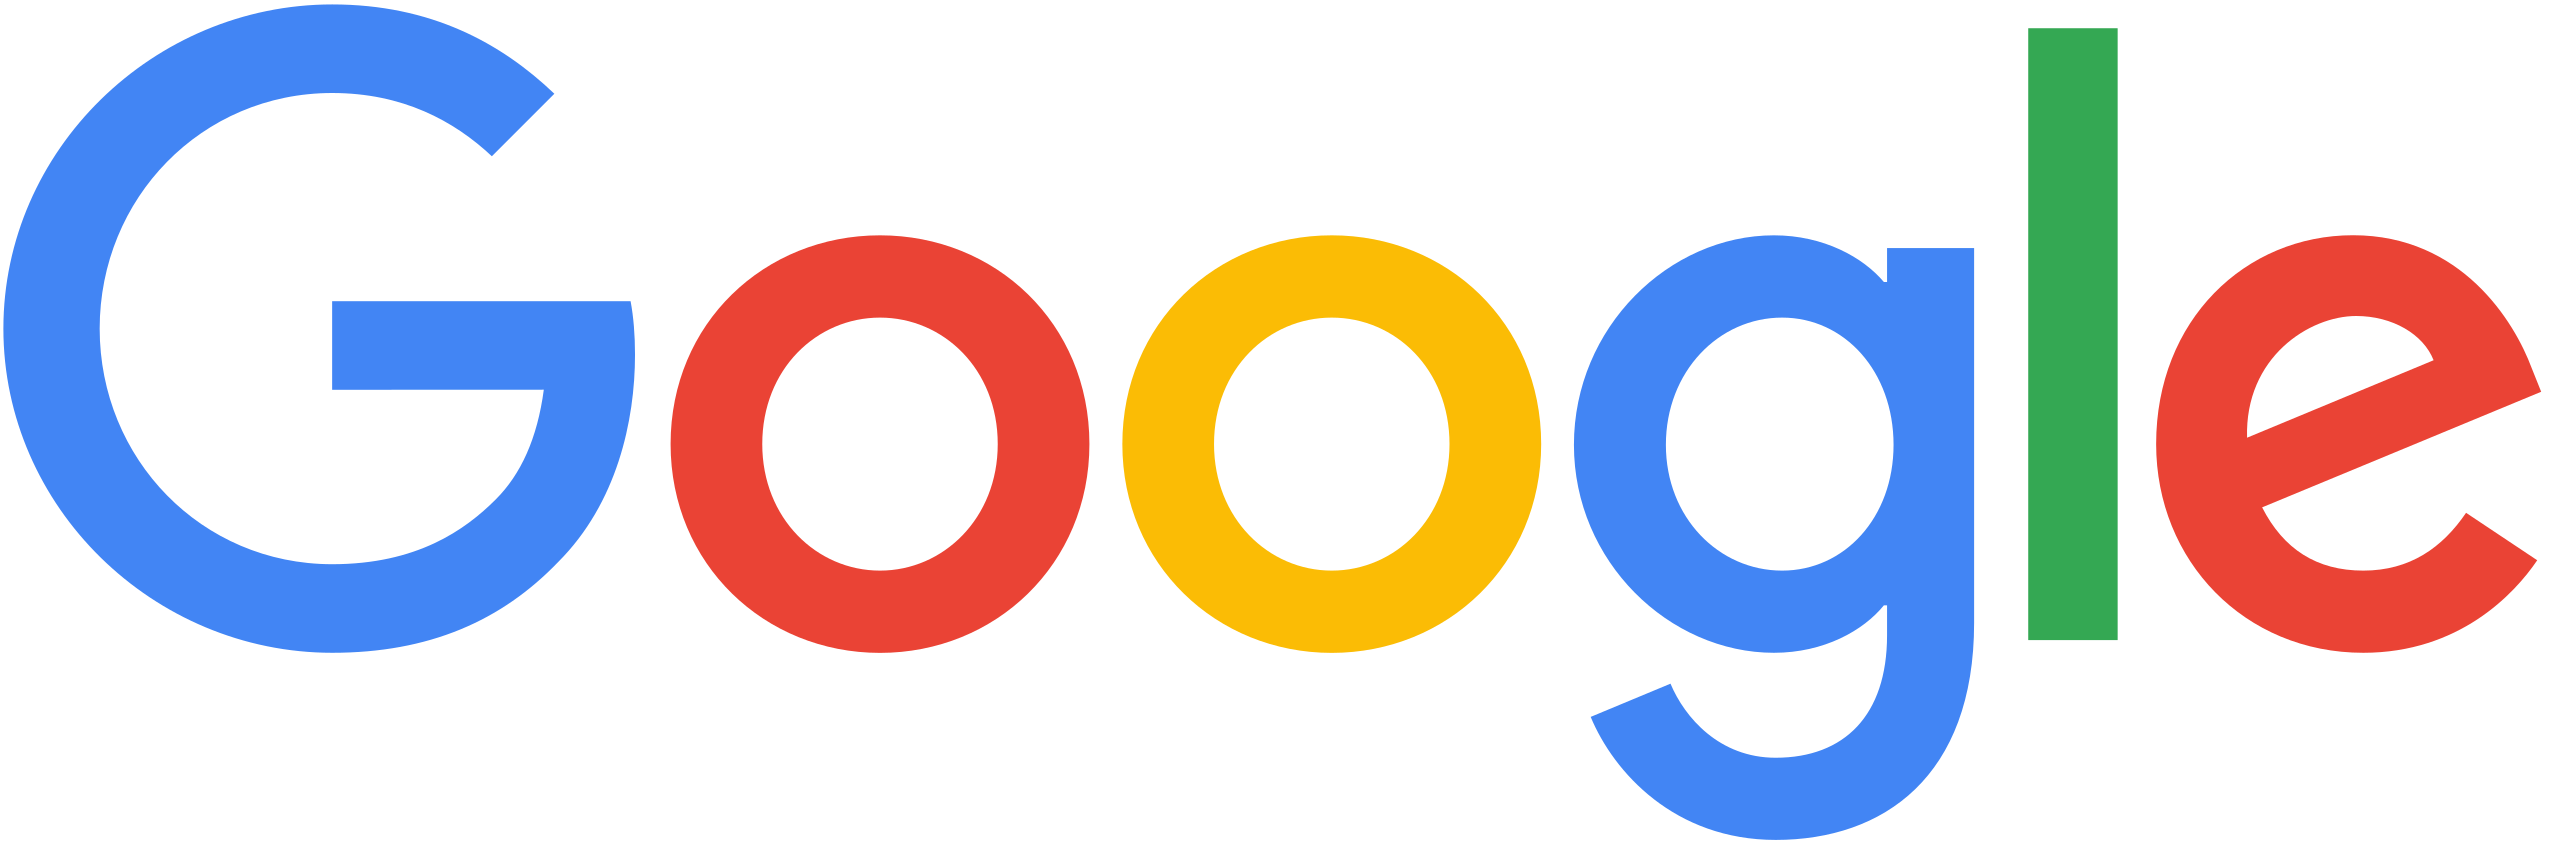 Google_2015_logo.svg (1)